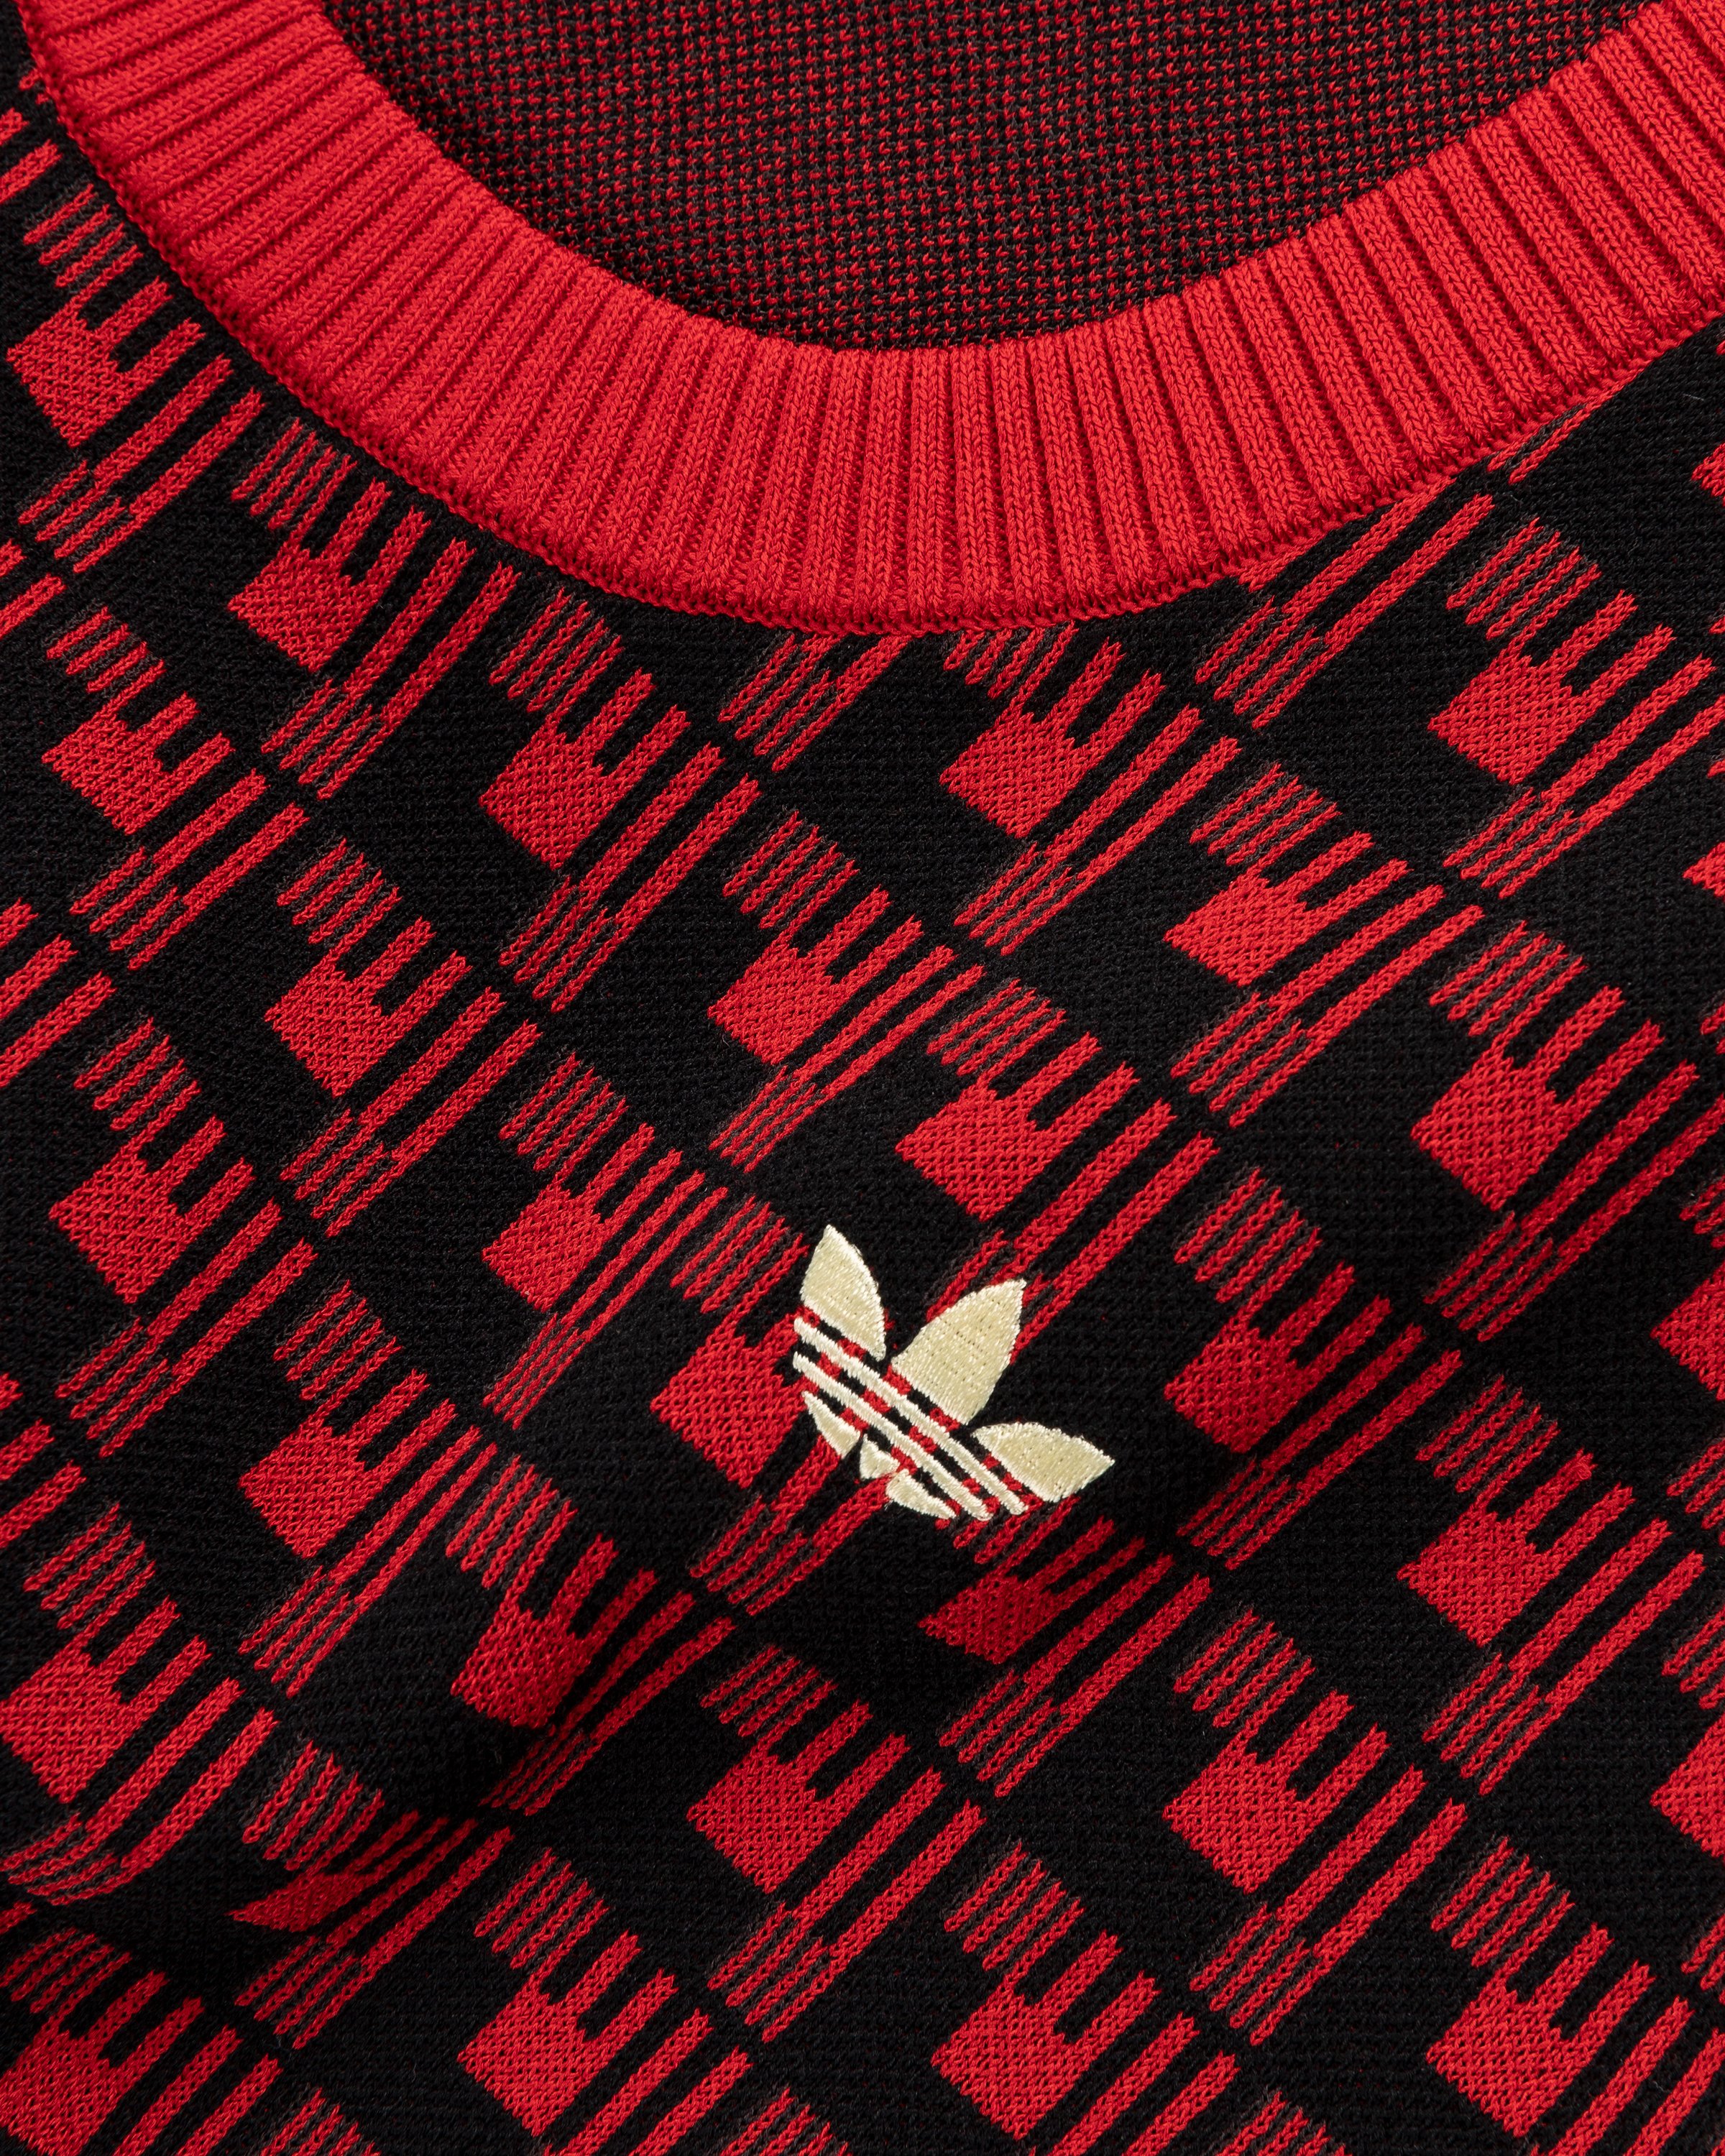 Adidas x Wales Bonner - WB Knit Vest Scarlet/Black - Clothing - Red - Image 6